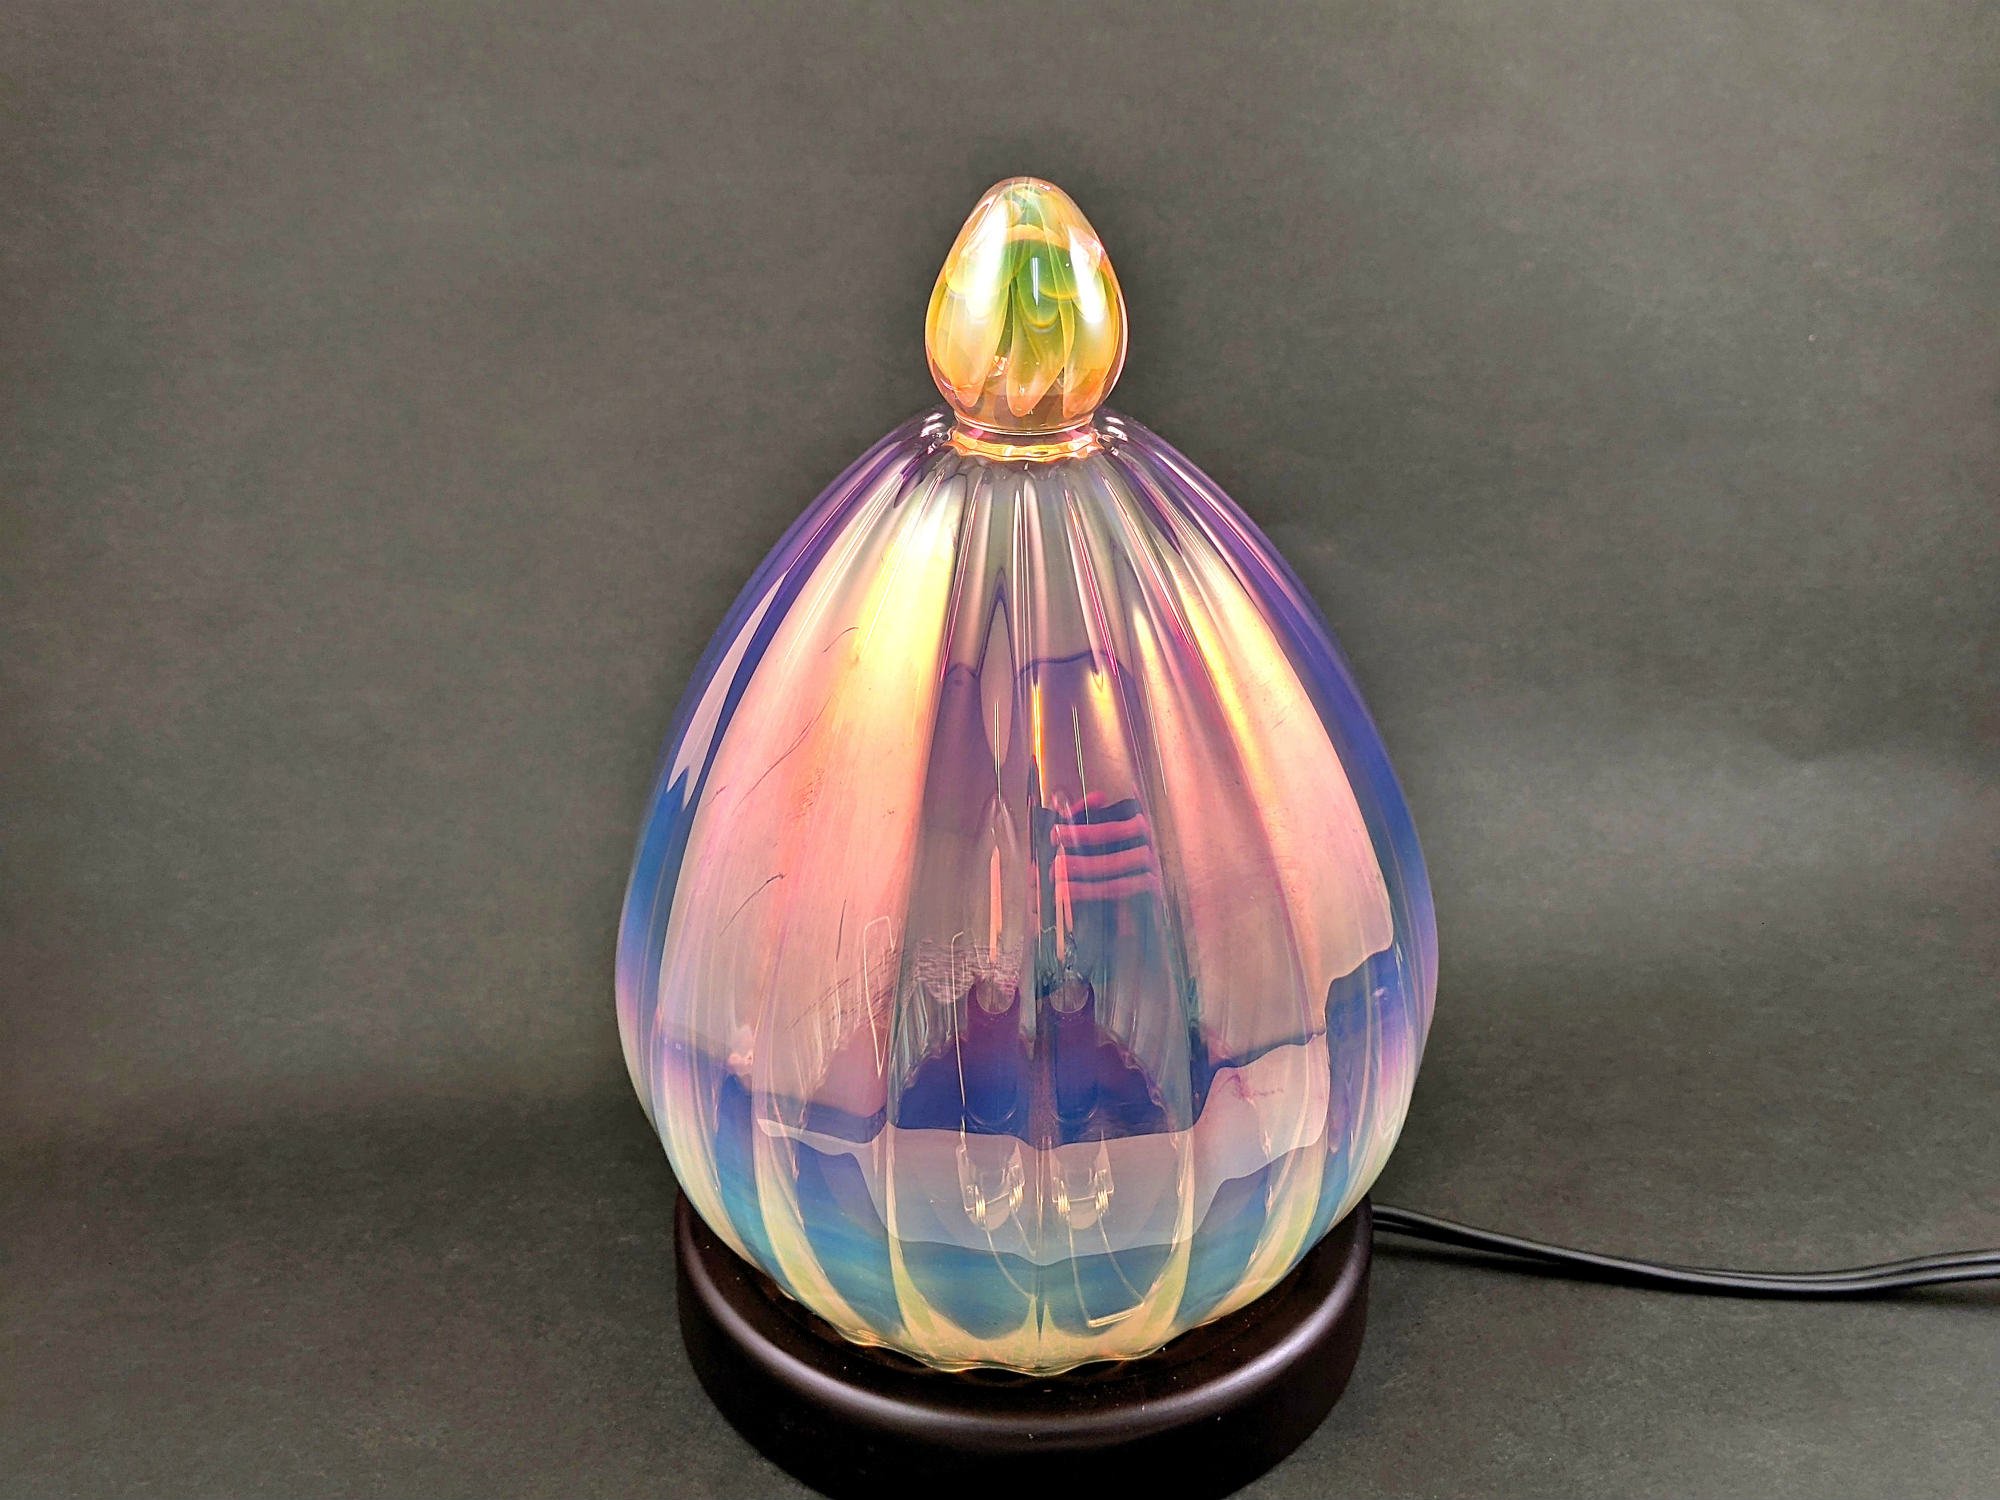 Shige Glass スタンドランプ xs-114 - 【Glass Gallery BOHEMIAN】 谷根千にあるボロシリケイトガラス アート・アクセサリー専門店